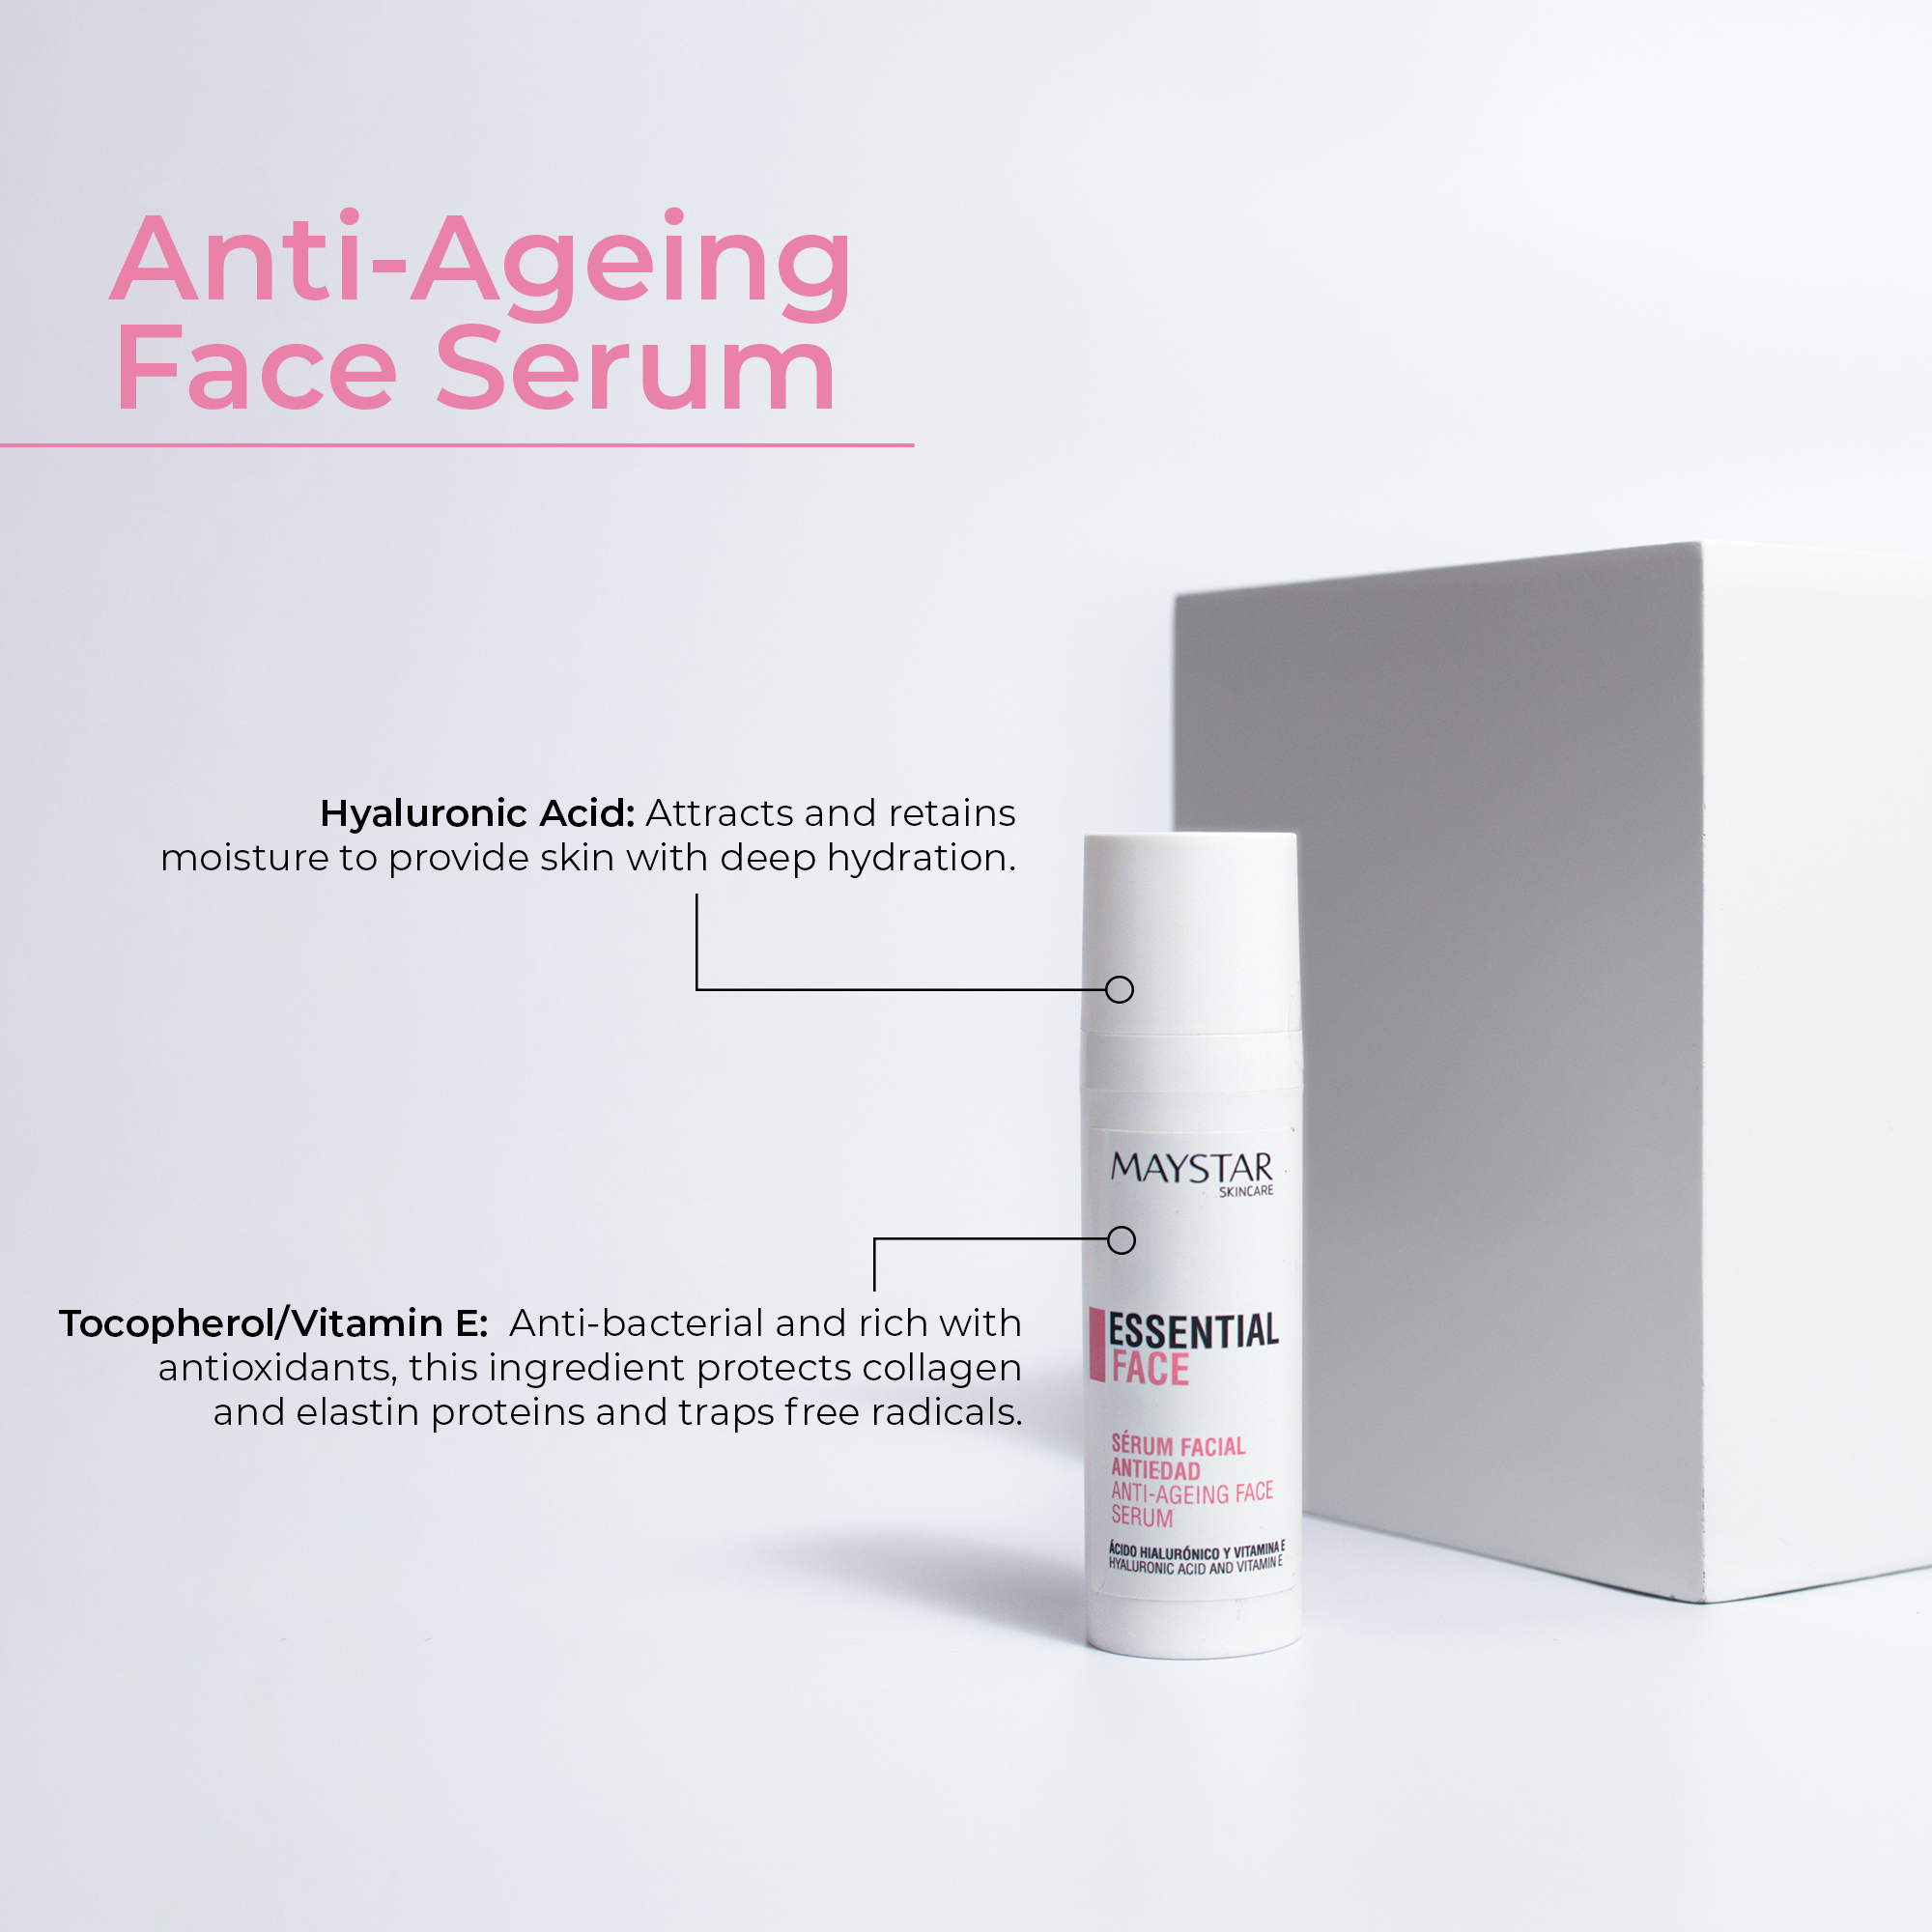 Anti-Aging Facial Serum - Maystar Essential